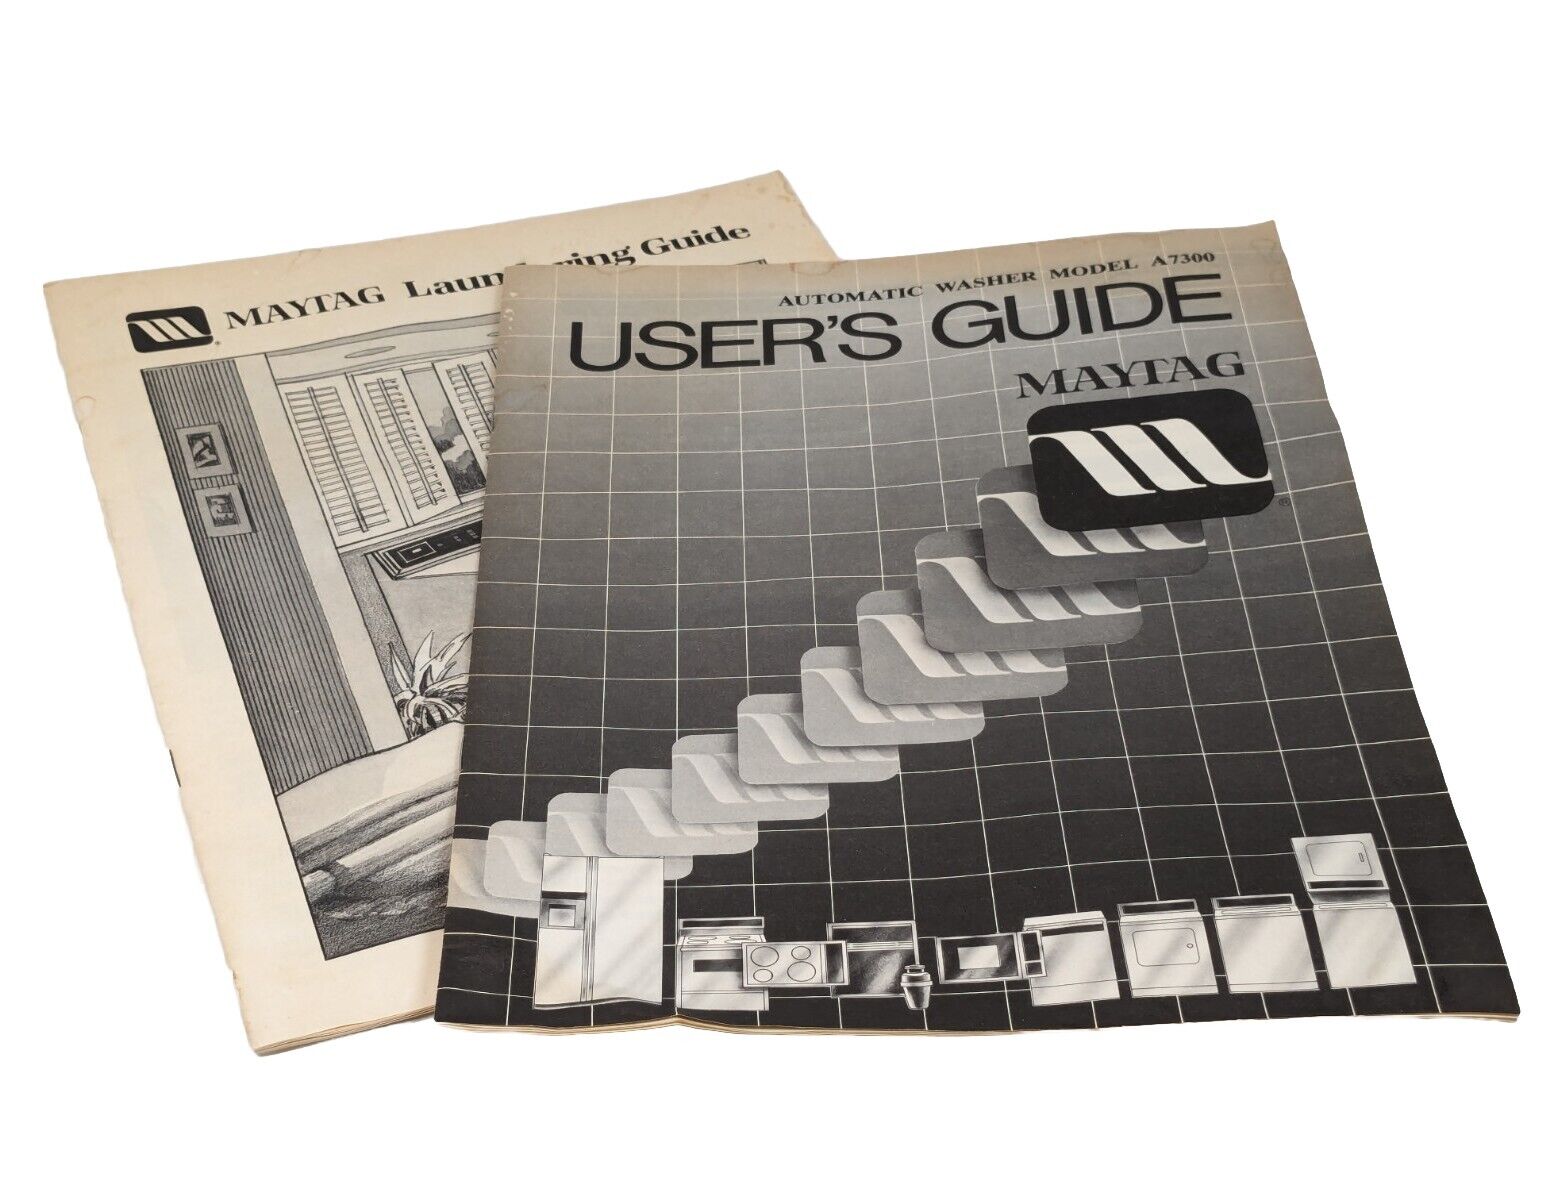 Maytag Washer A7300 Users Guide Laundering 1990 Ephemera Vtg USA Booklet